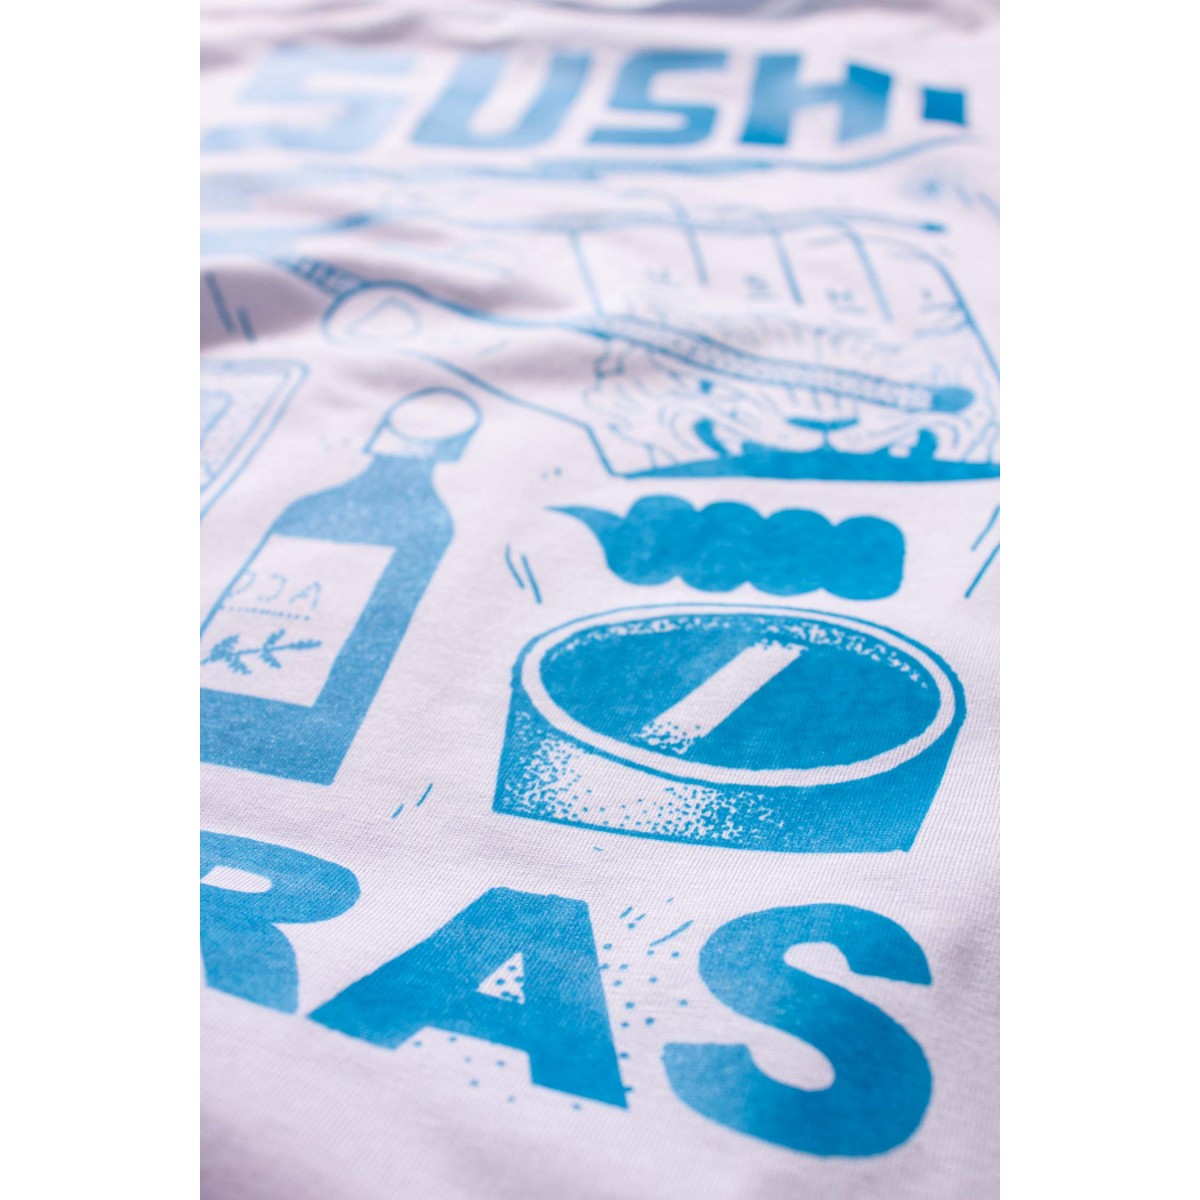 Martin Krusche - T-Shirt White »Sushi Ultras«